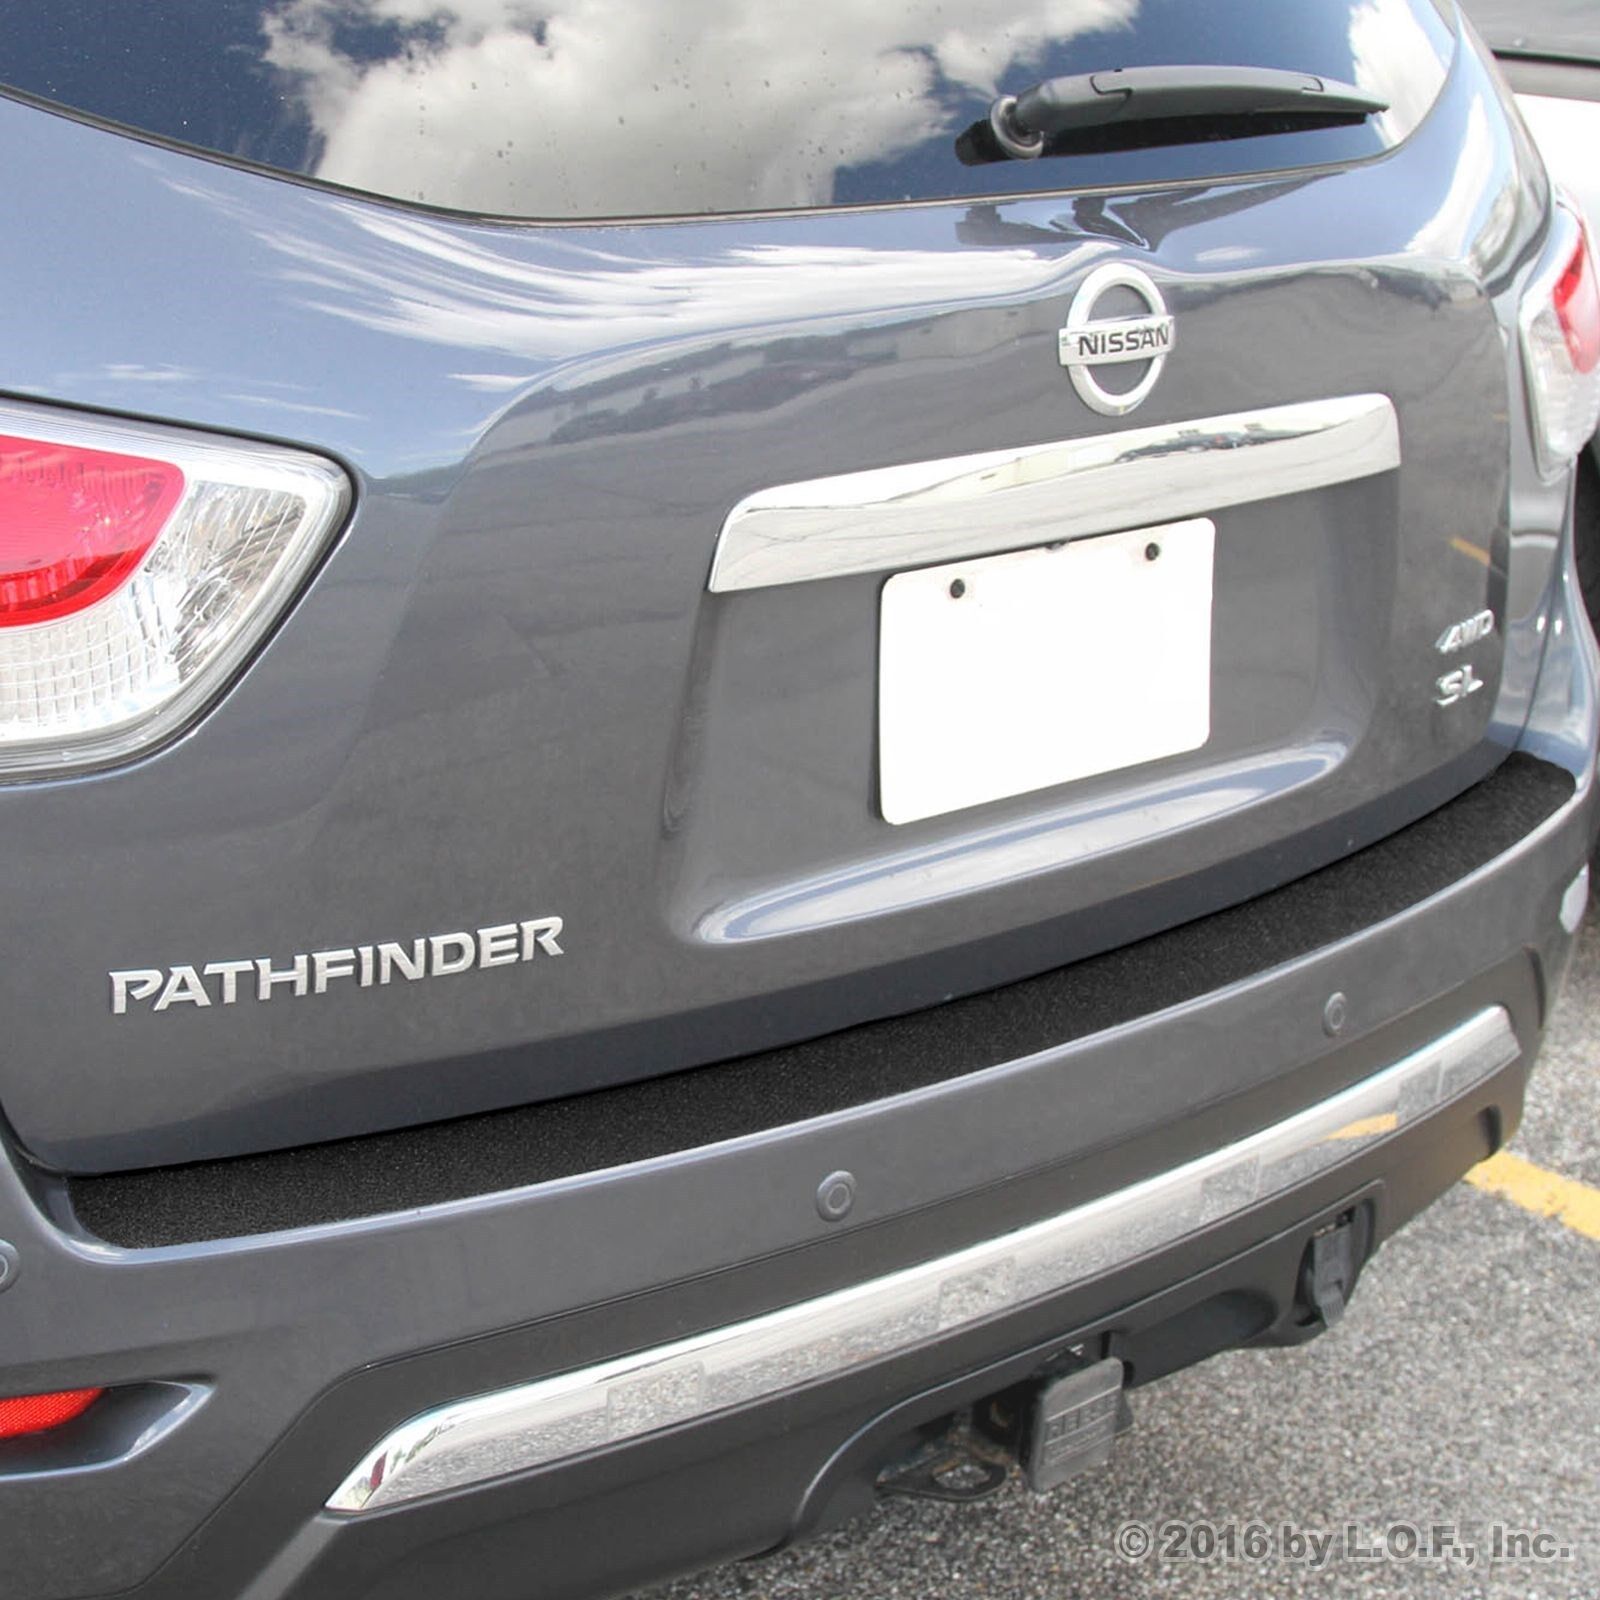 2013-2016 Fits Nissan Pathfinder 1pc Rear Bumper Applique Scratch Guard Cover